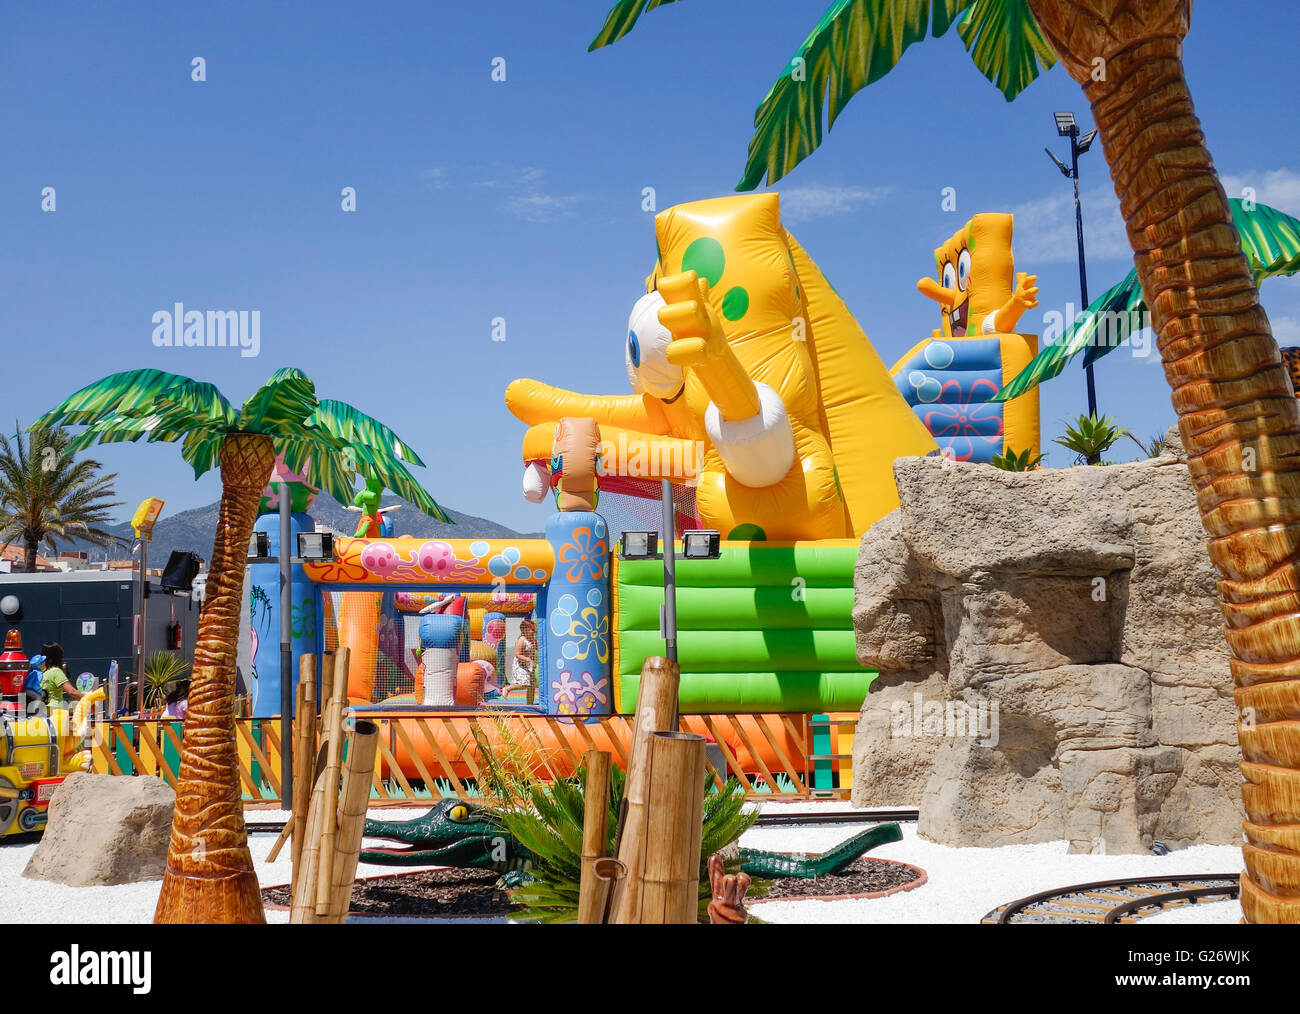 Hüpfburg SpongeBob im Vergnügungspark für Kinder. Spanien Stockfotografie -  Alamy